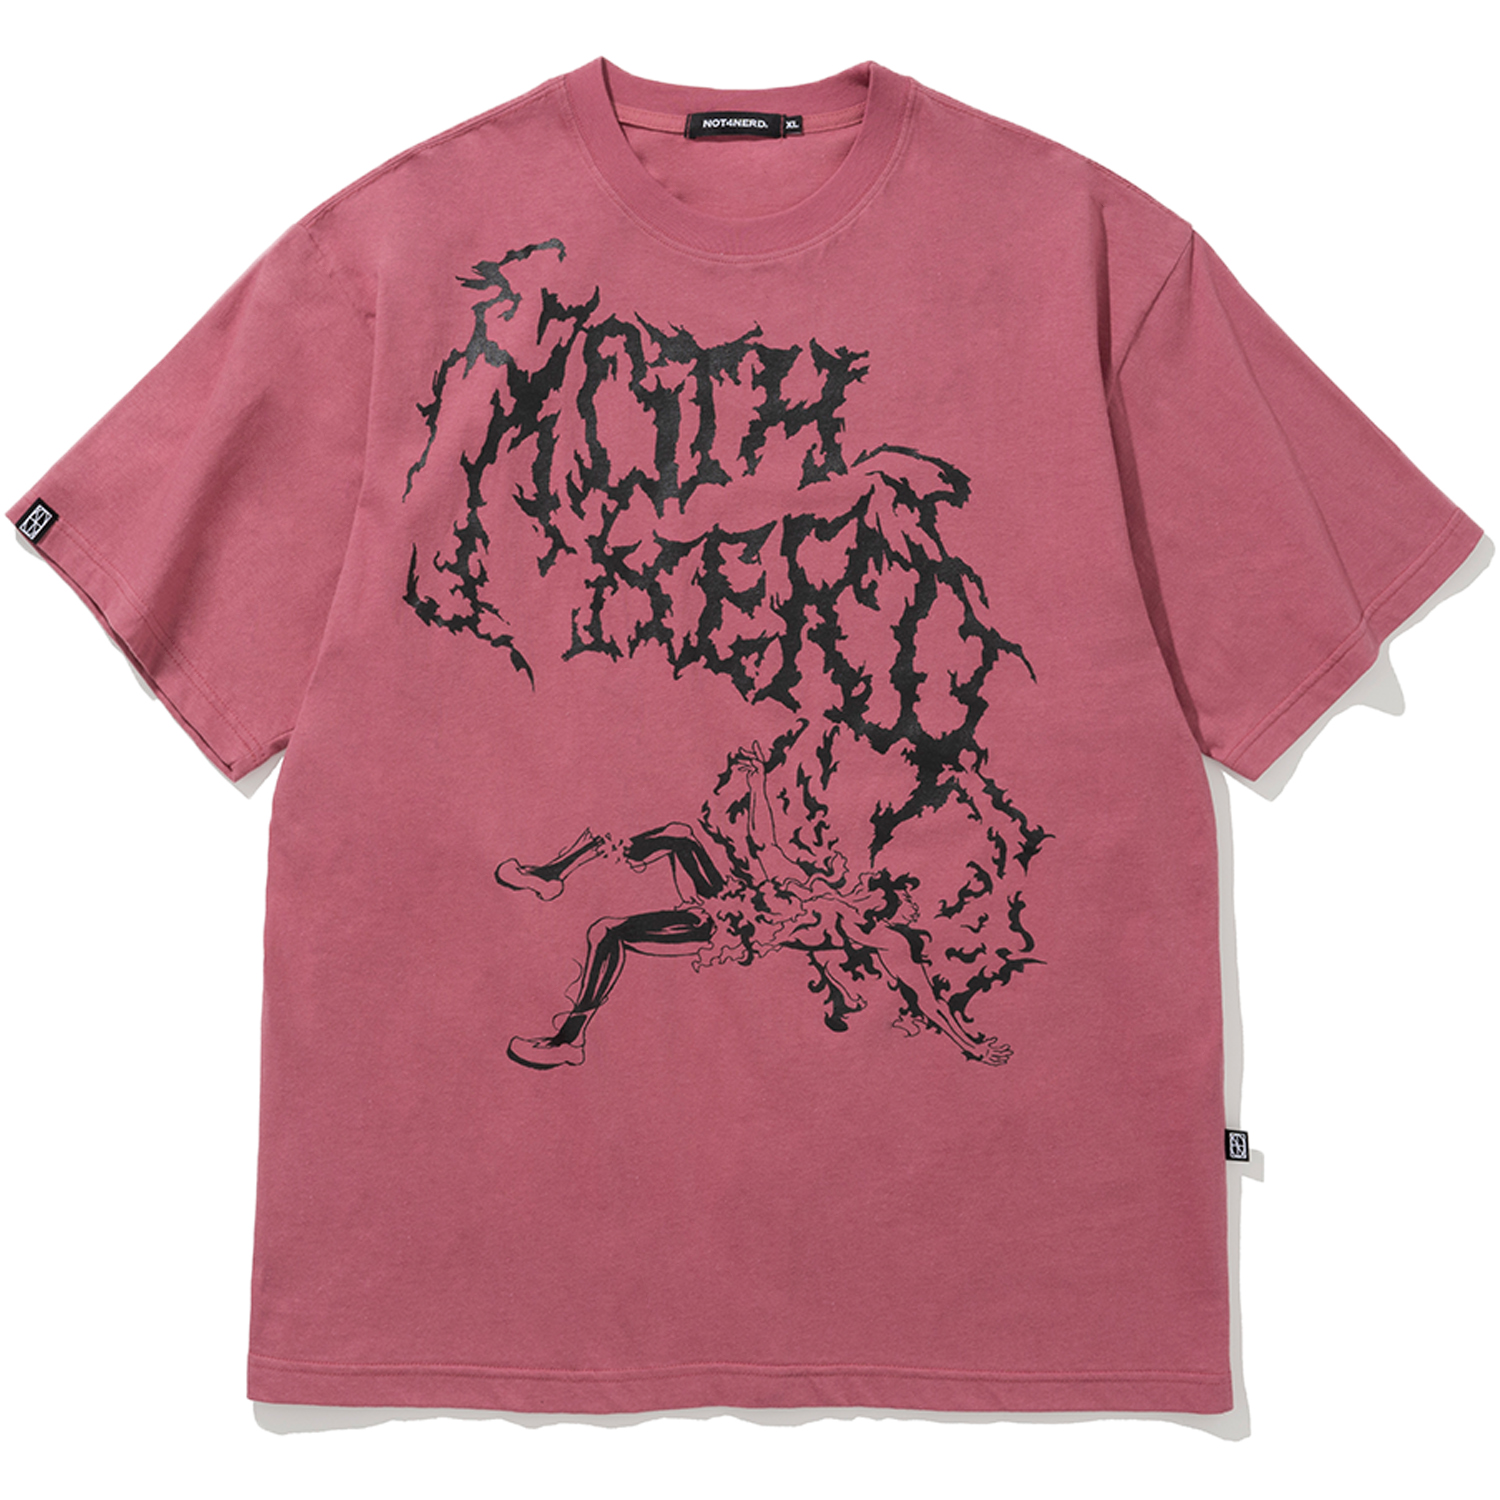 Scream T-Shirts - Dark Pink,NOT4NERD